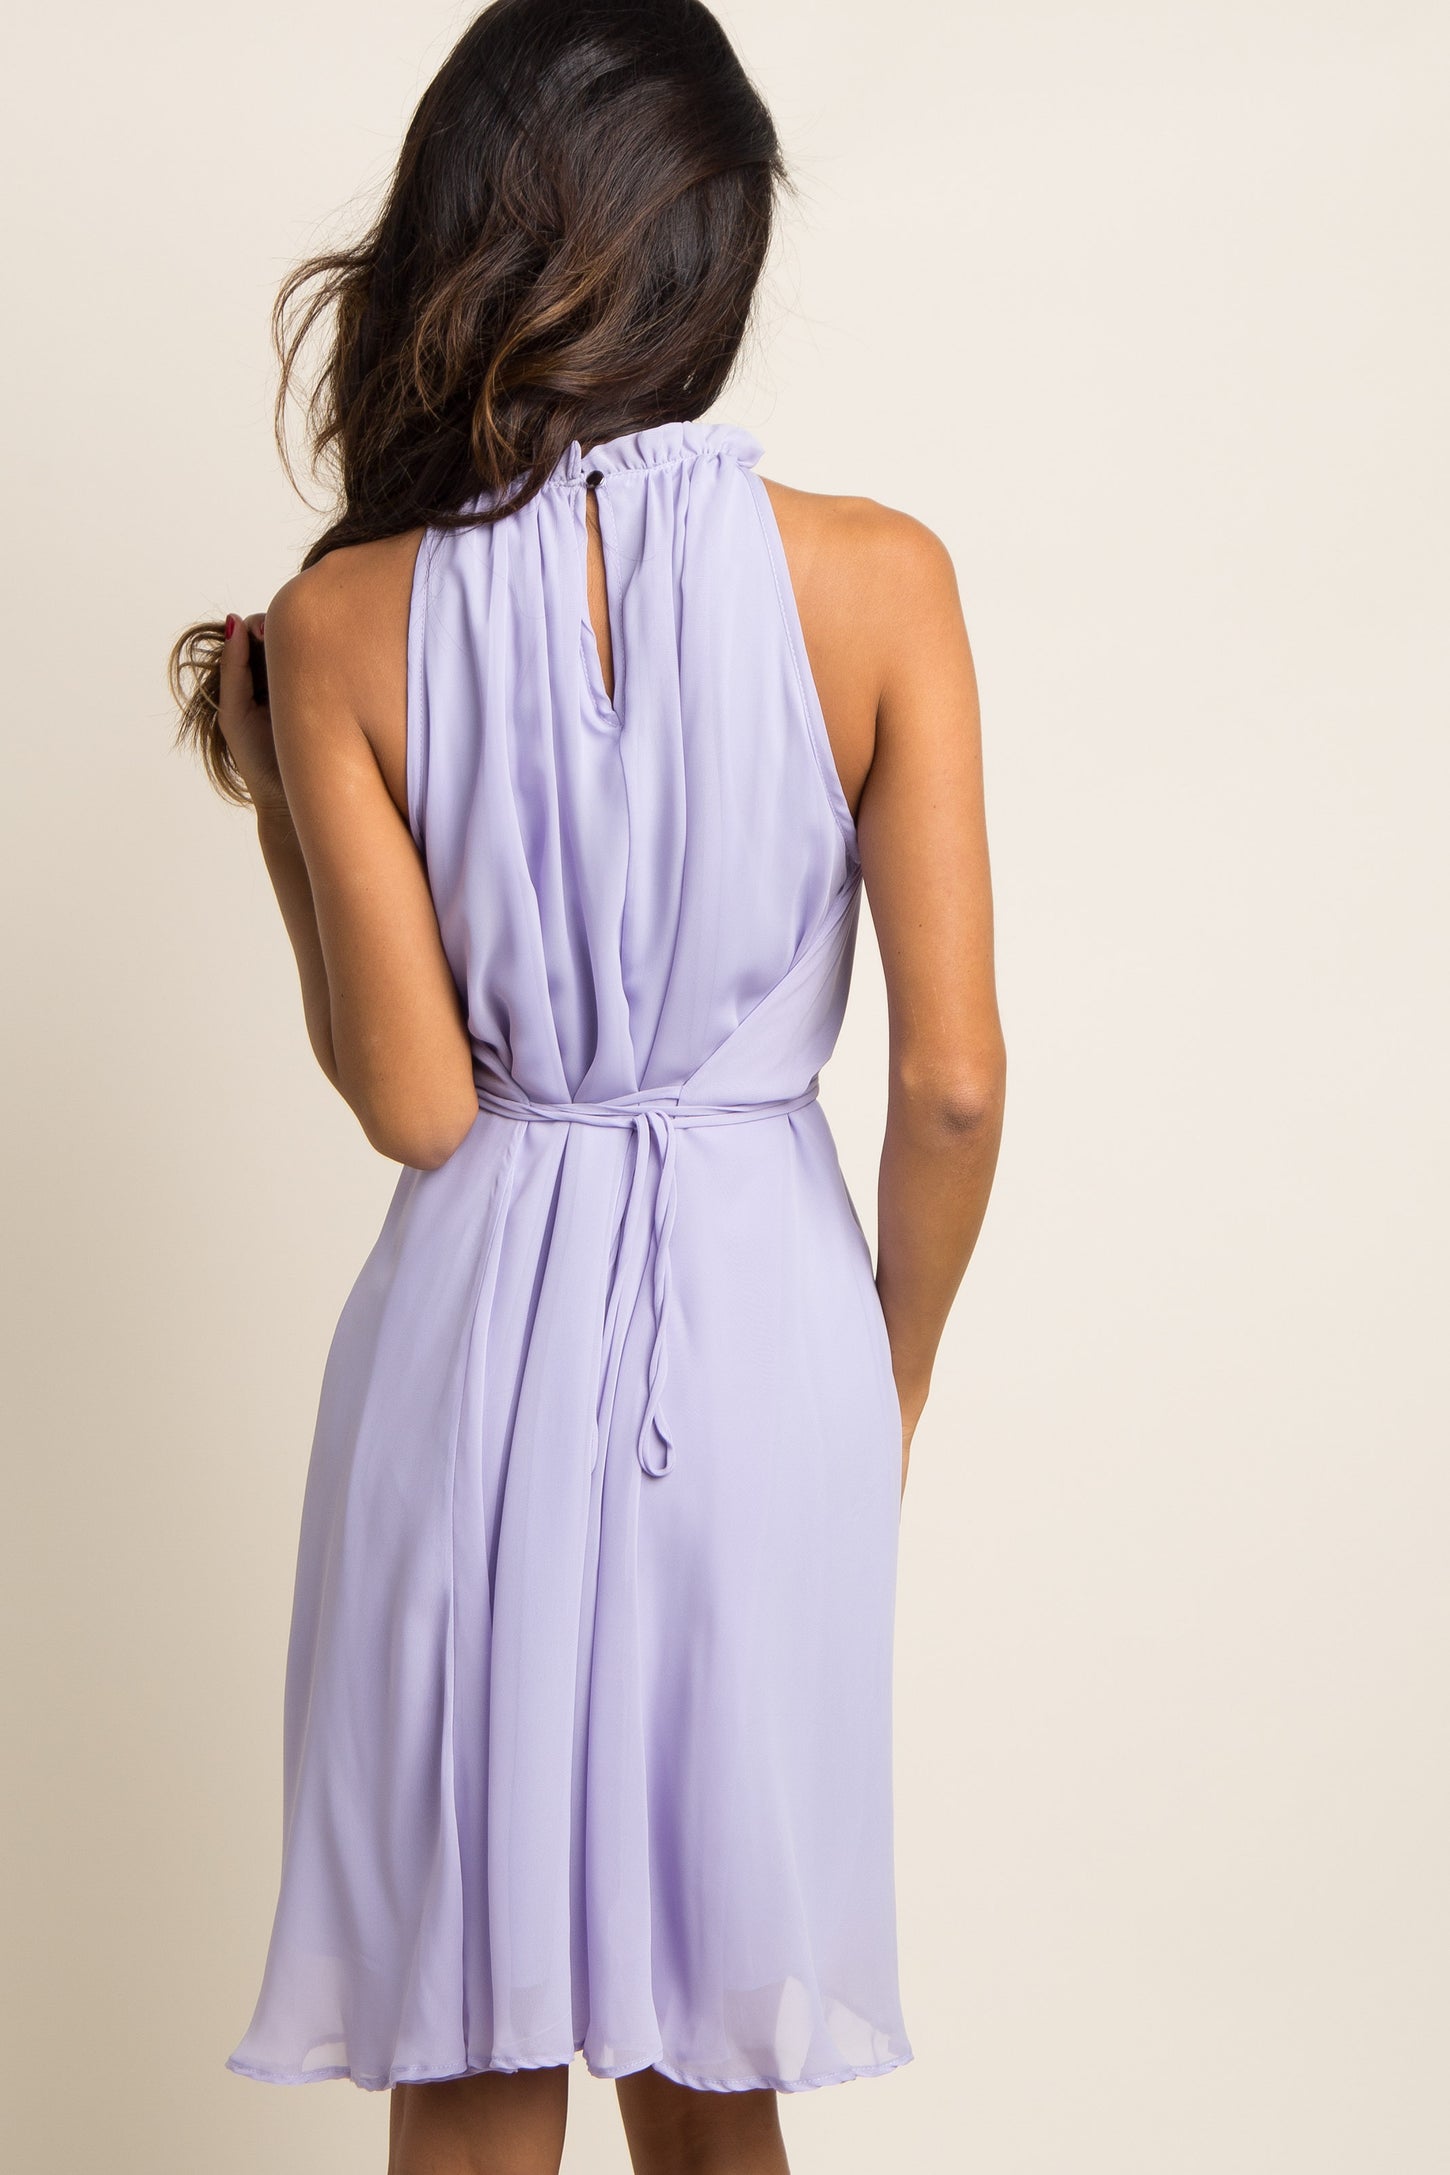 Lavender Chiffon High Neck Dress